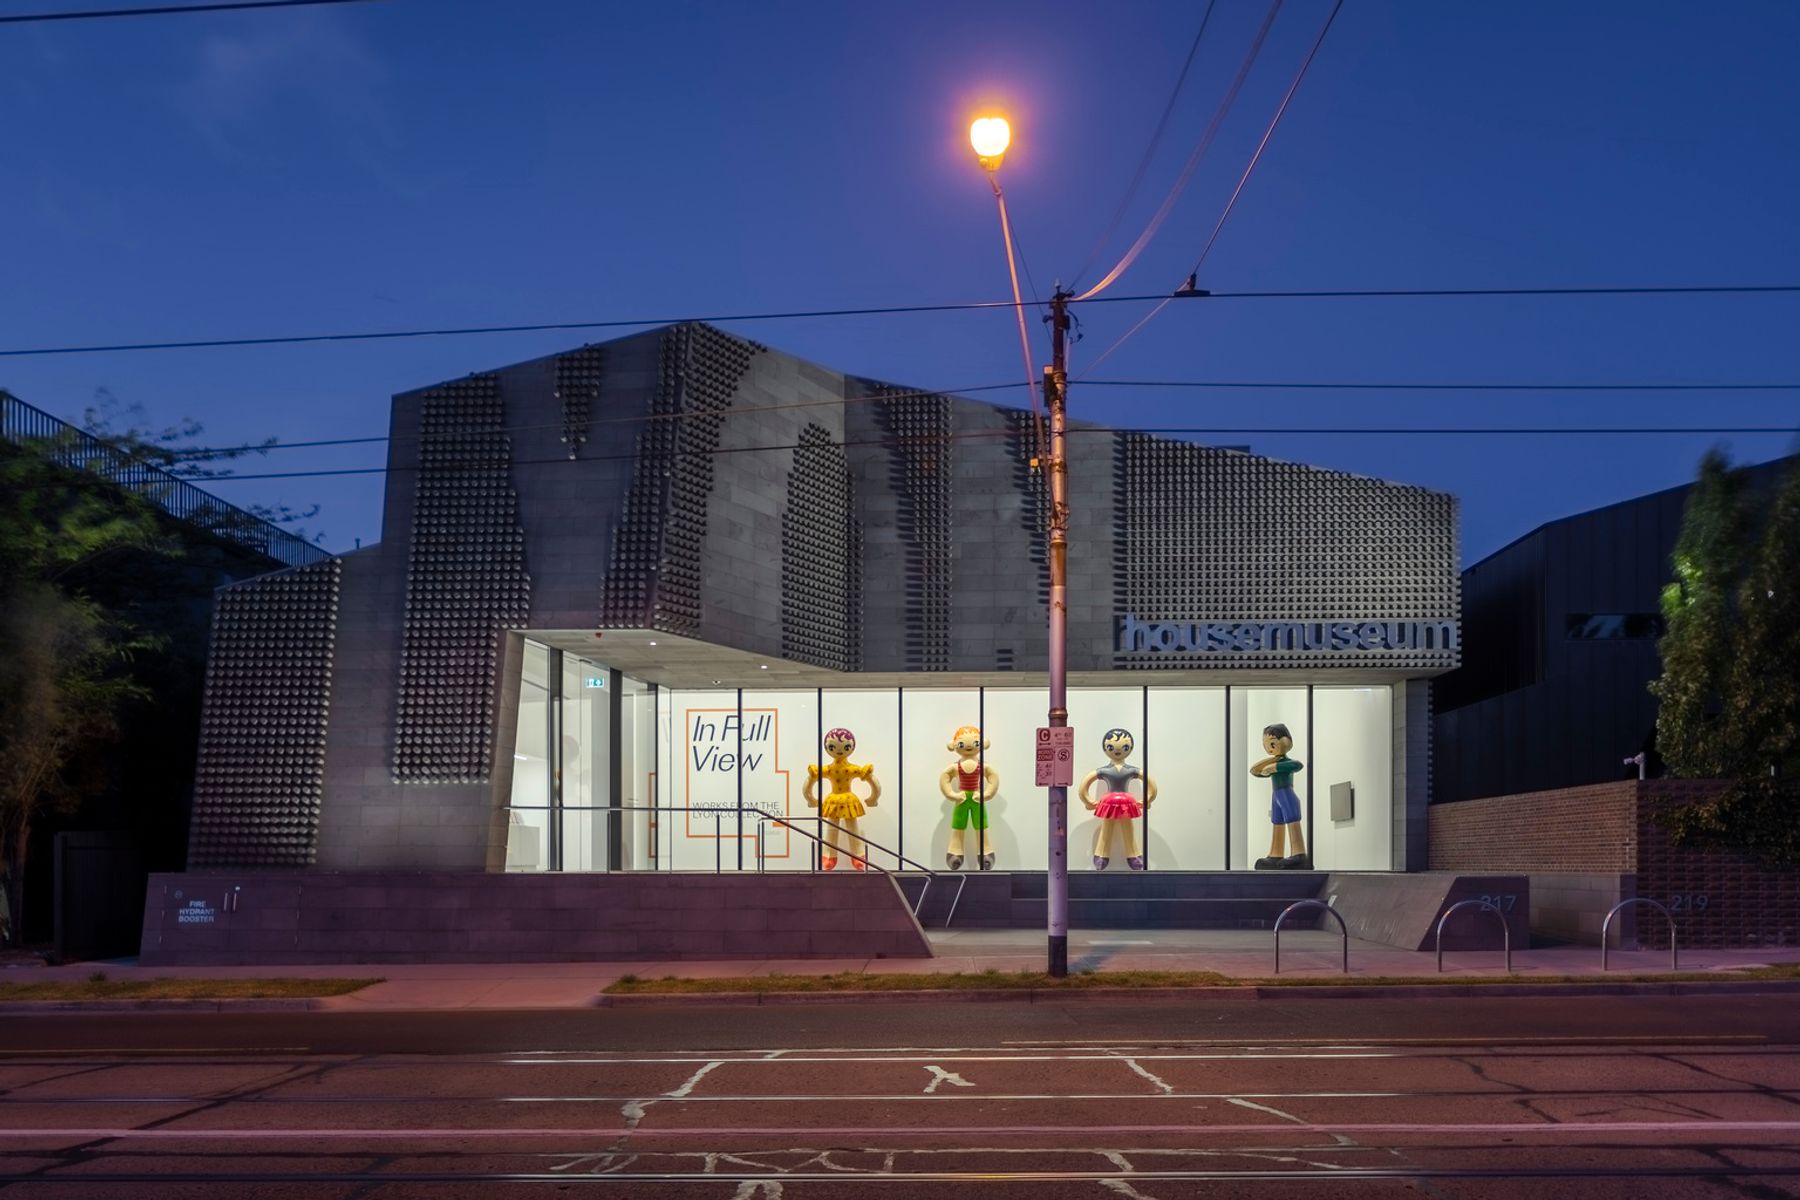 Lyon Housemuseum, Melbourne. Architecture : Lyons Architects. Photographie : Jackie Chan, Sydney.